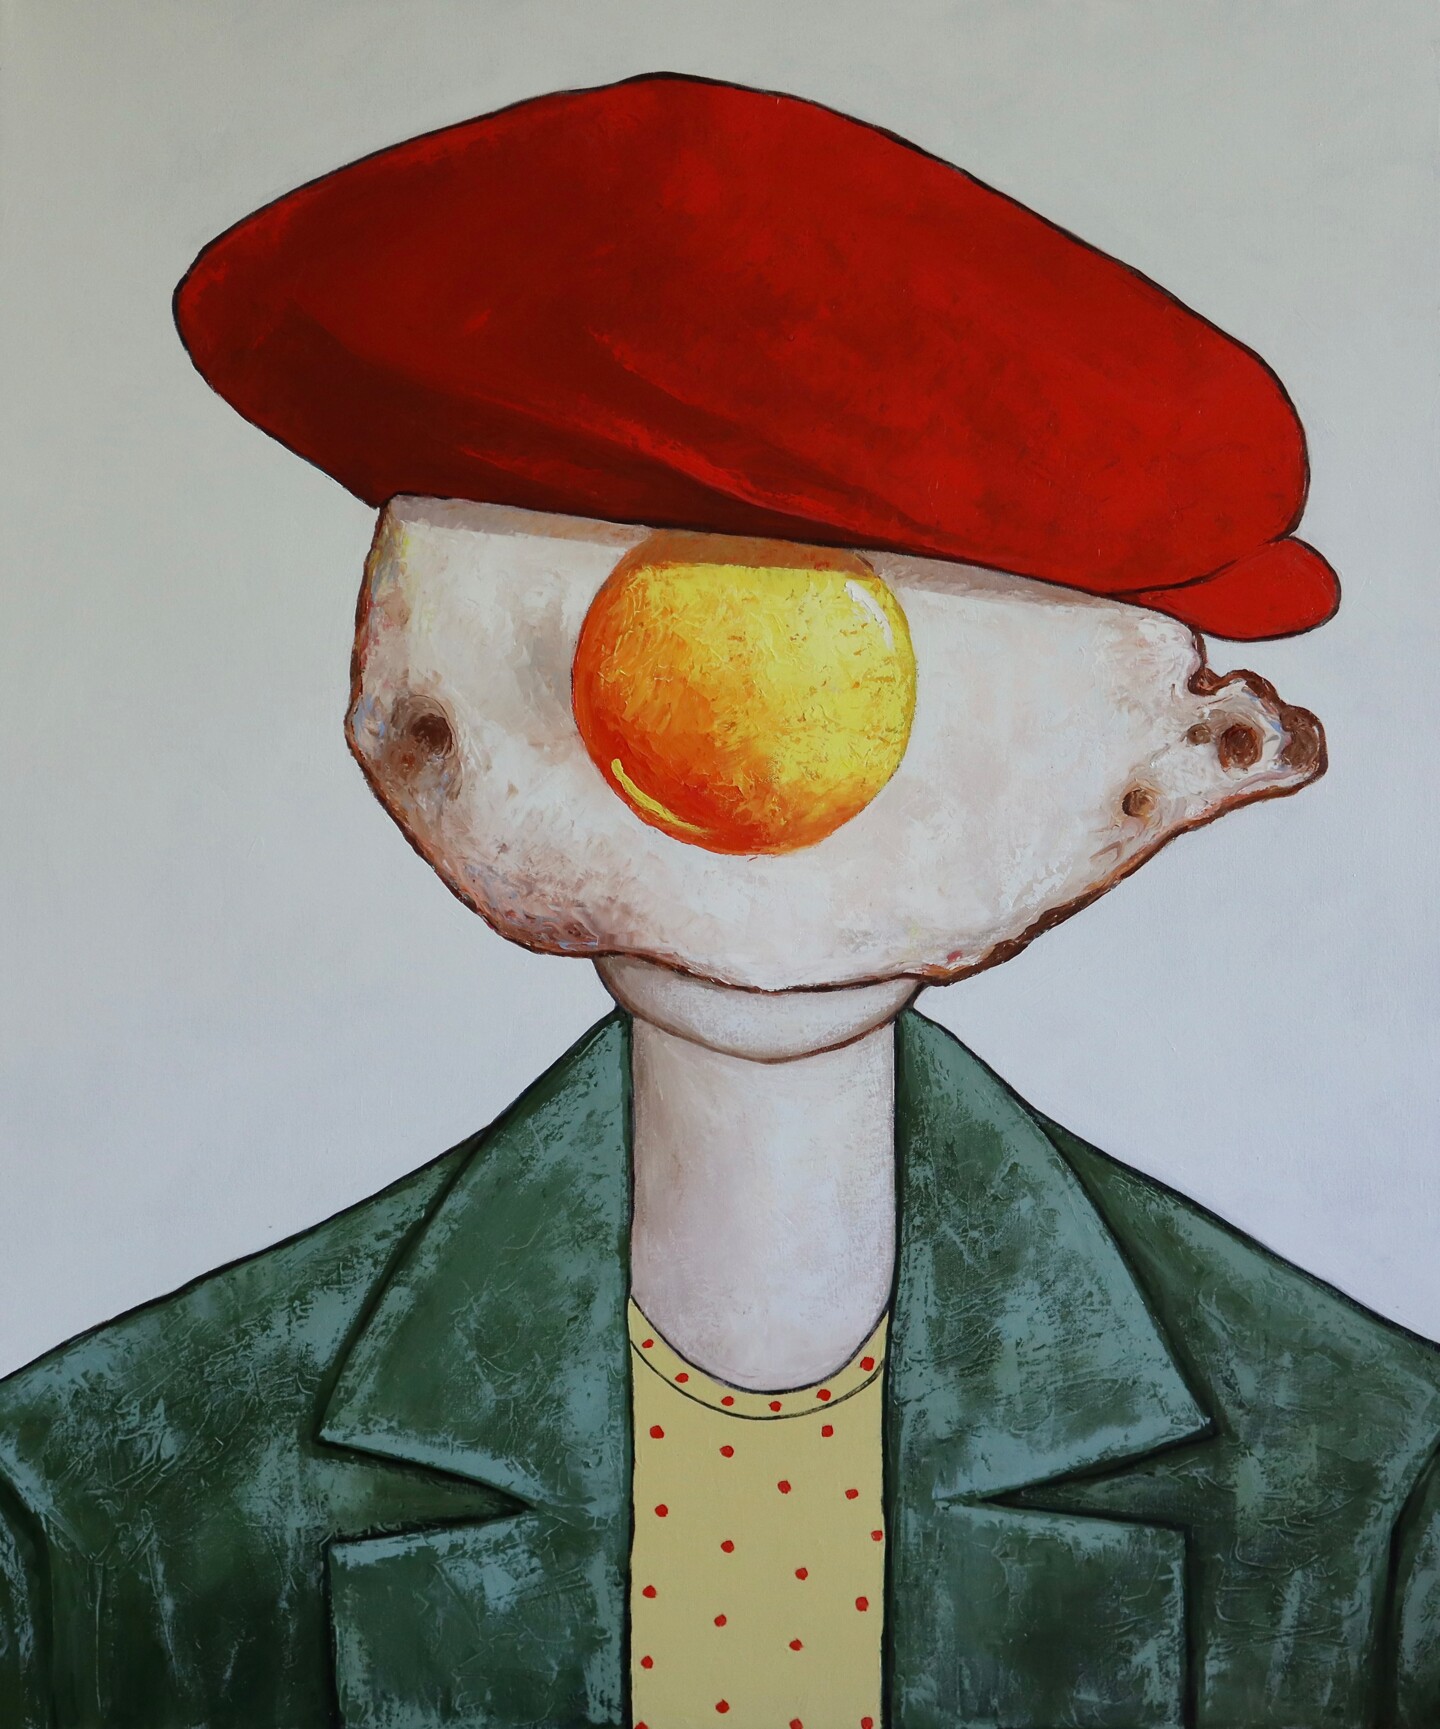 Ta Byrne - Egg boy in red hat